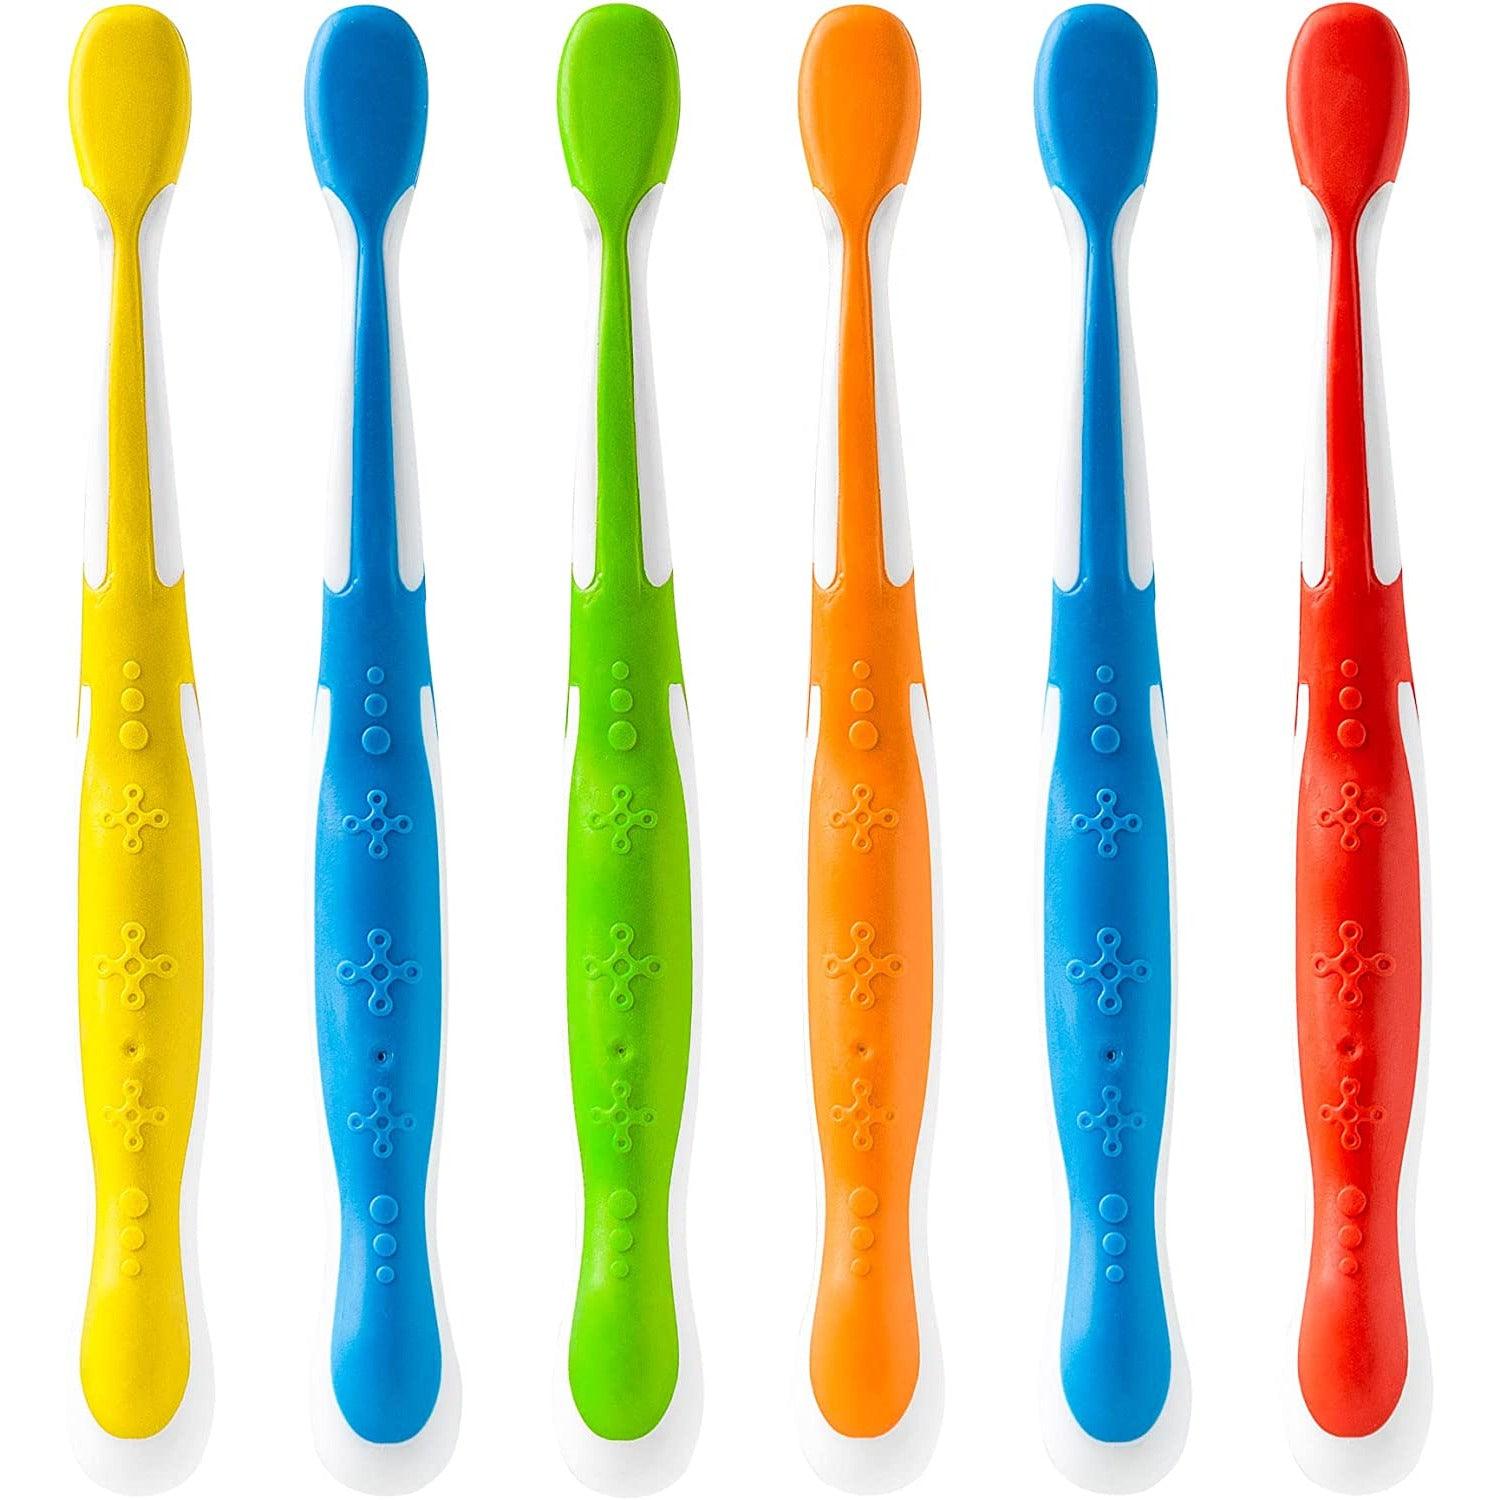 Brush Buddies Hot Wheels Toothbrush for Kids - 6PK - BumbleToys - 4+ Years, 5-7 Years, Baby Saftey & Health, hot wheels, Pre-Order, Toothbrush